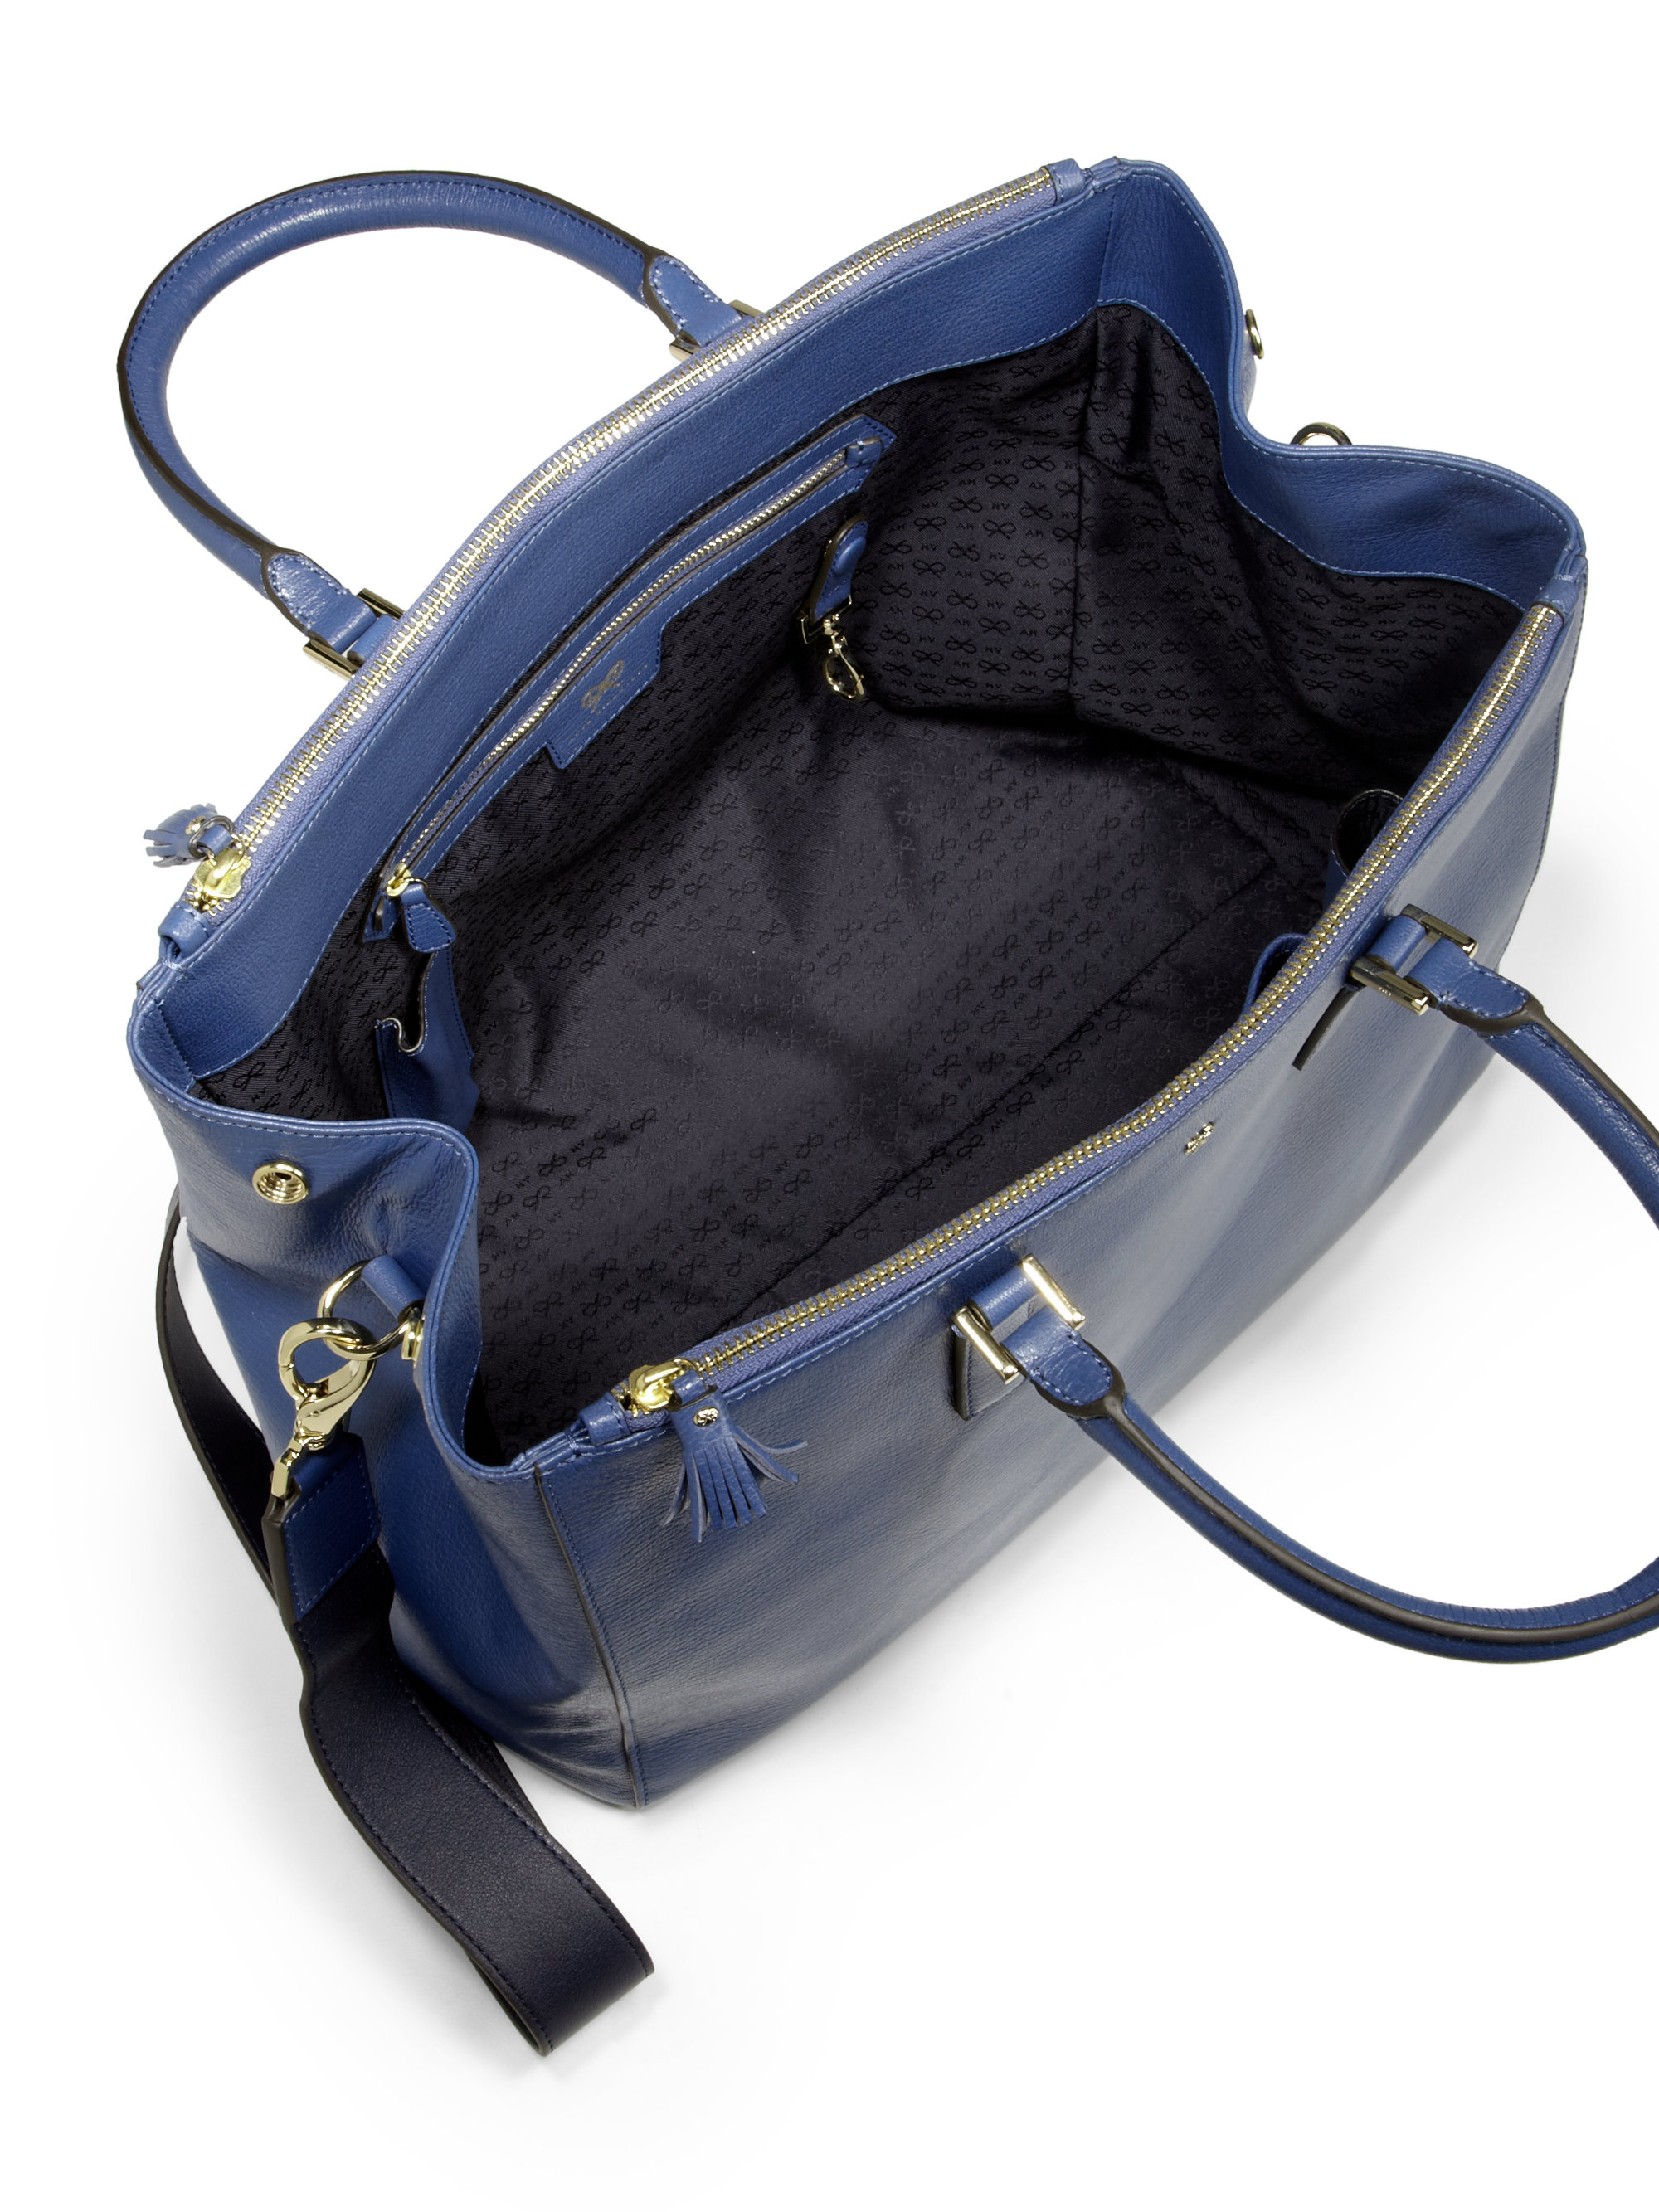 Anya Hindmarch Ebury Capra Shoulder Bag in Blue - Lyst